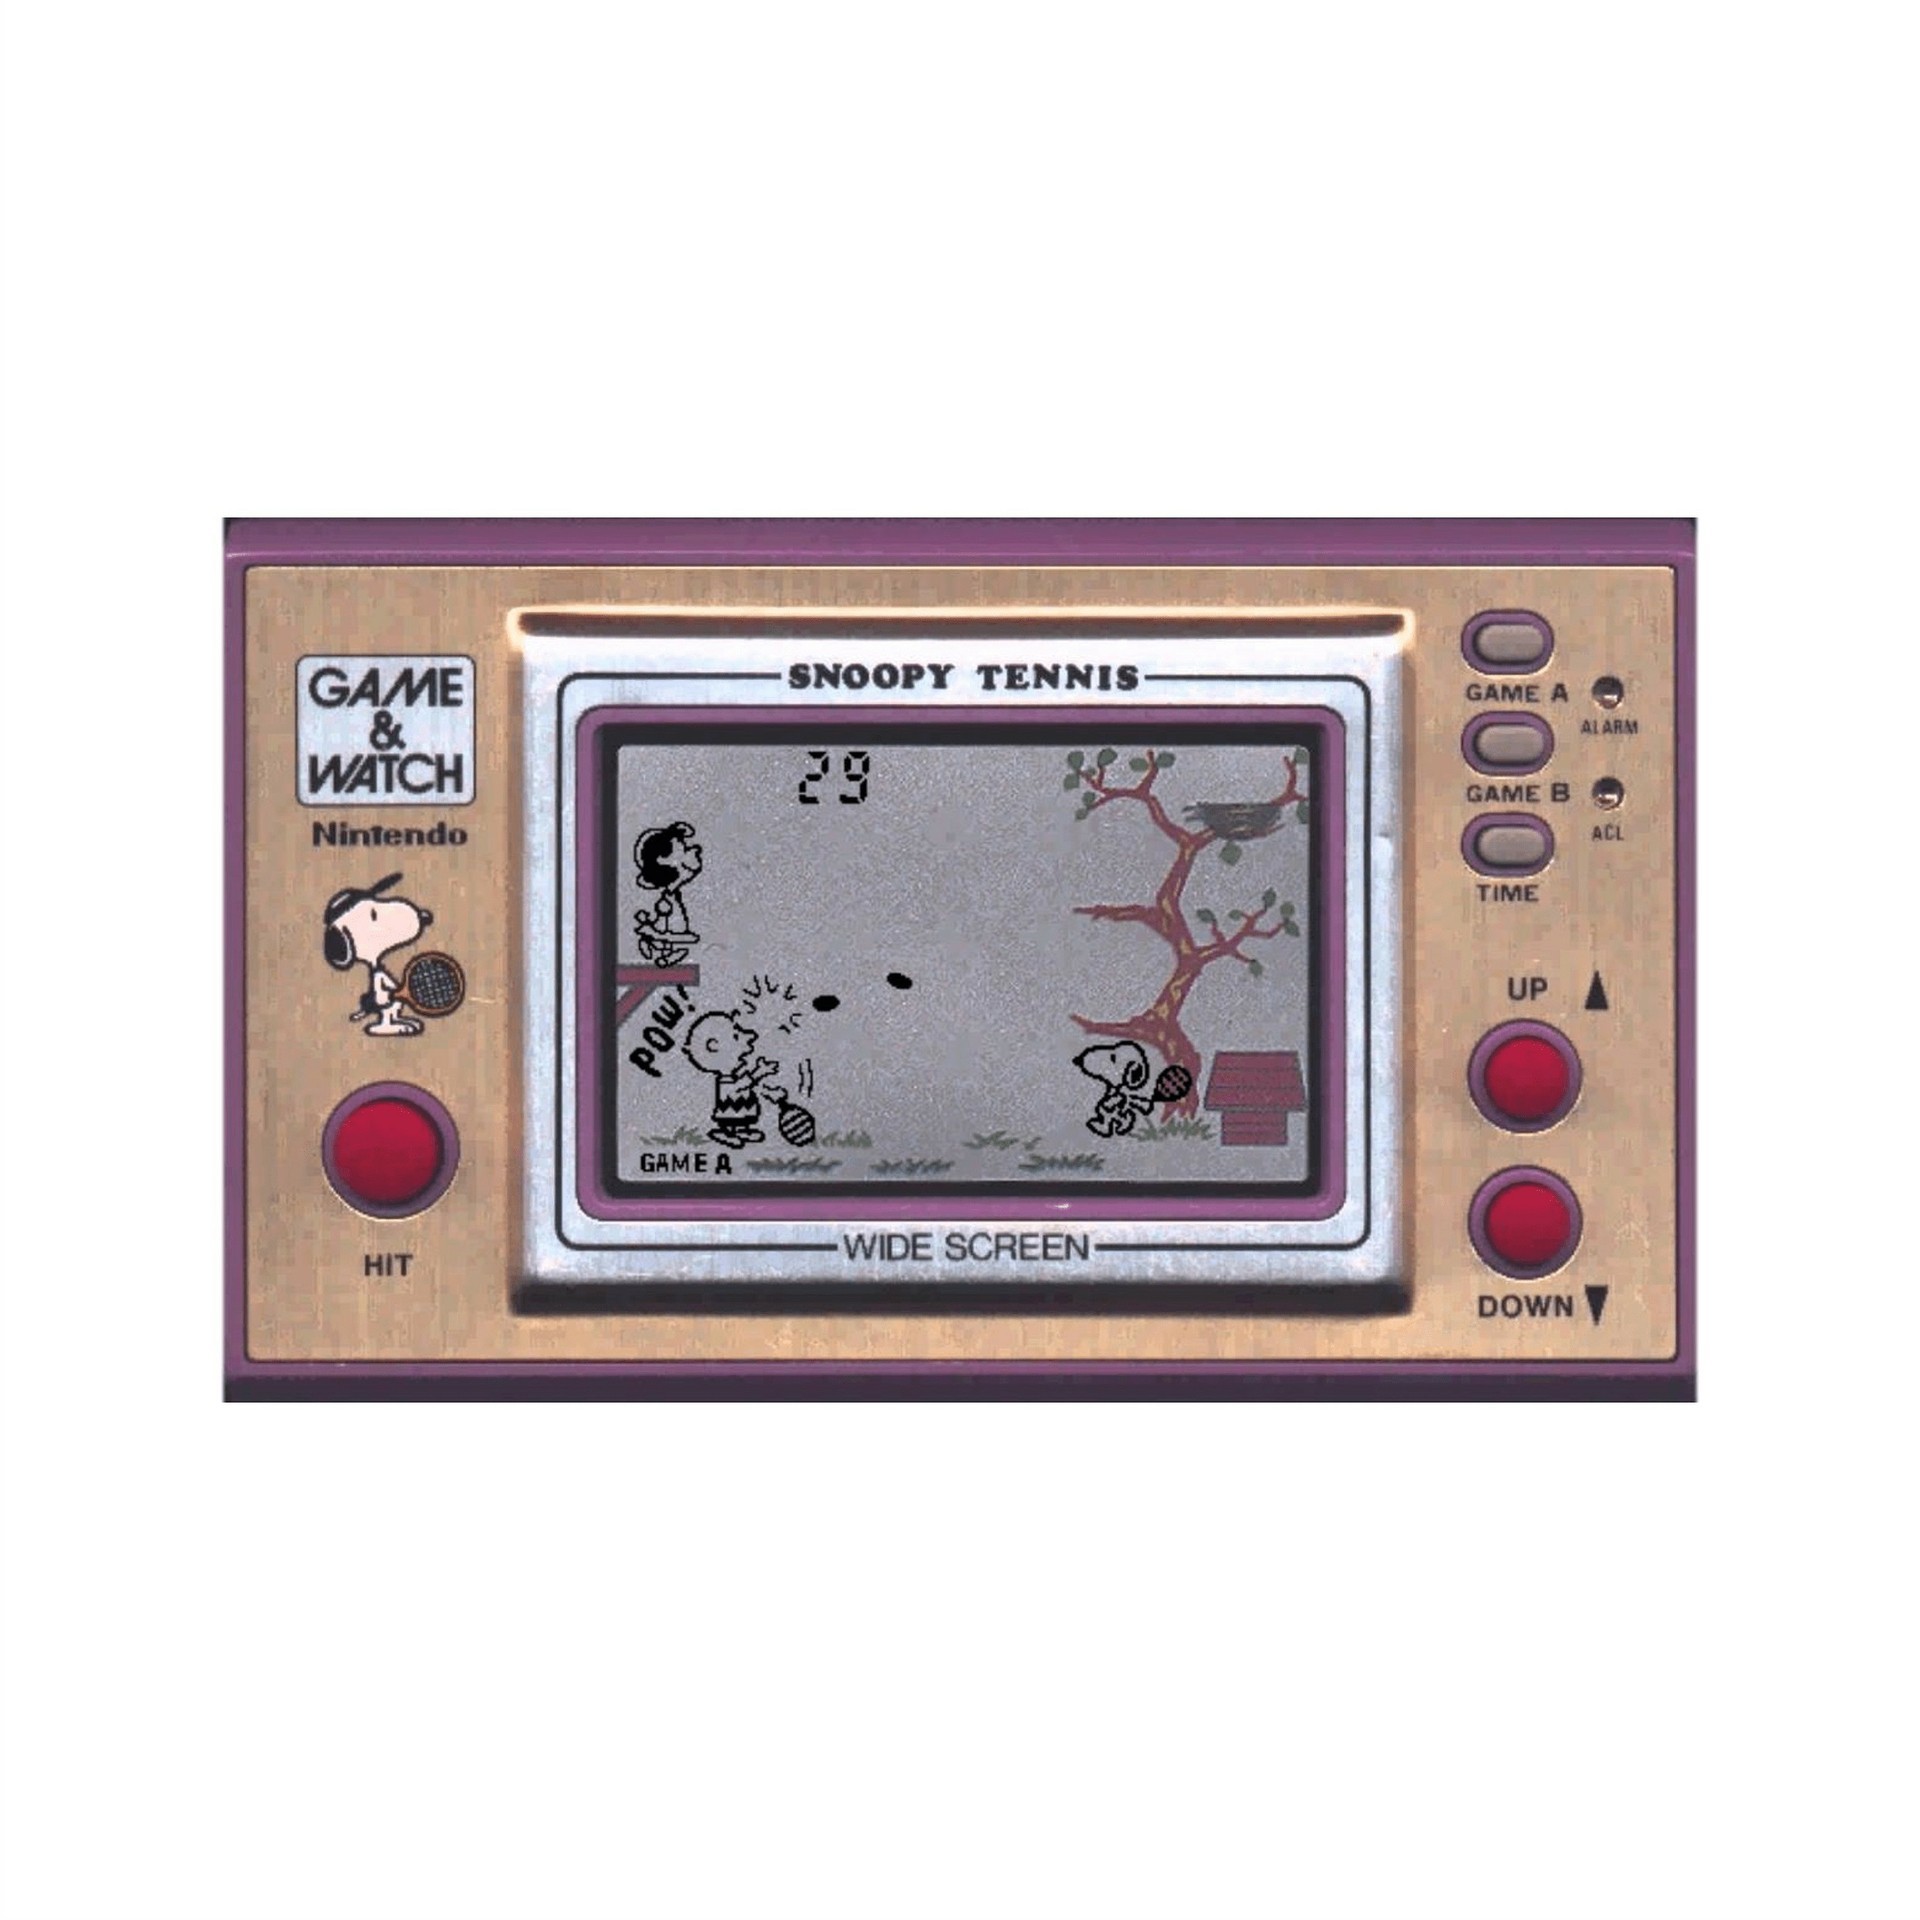 Nintendo Game & Watch - Snoopy Tennis - Gameboy Classic Hardware